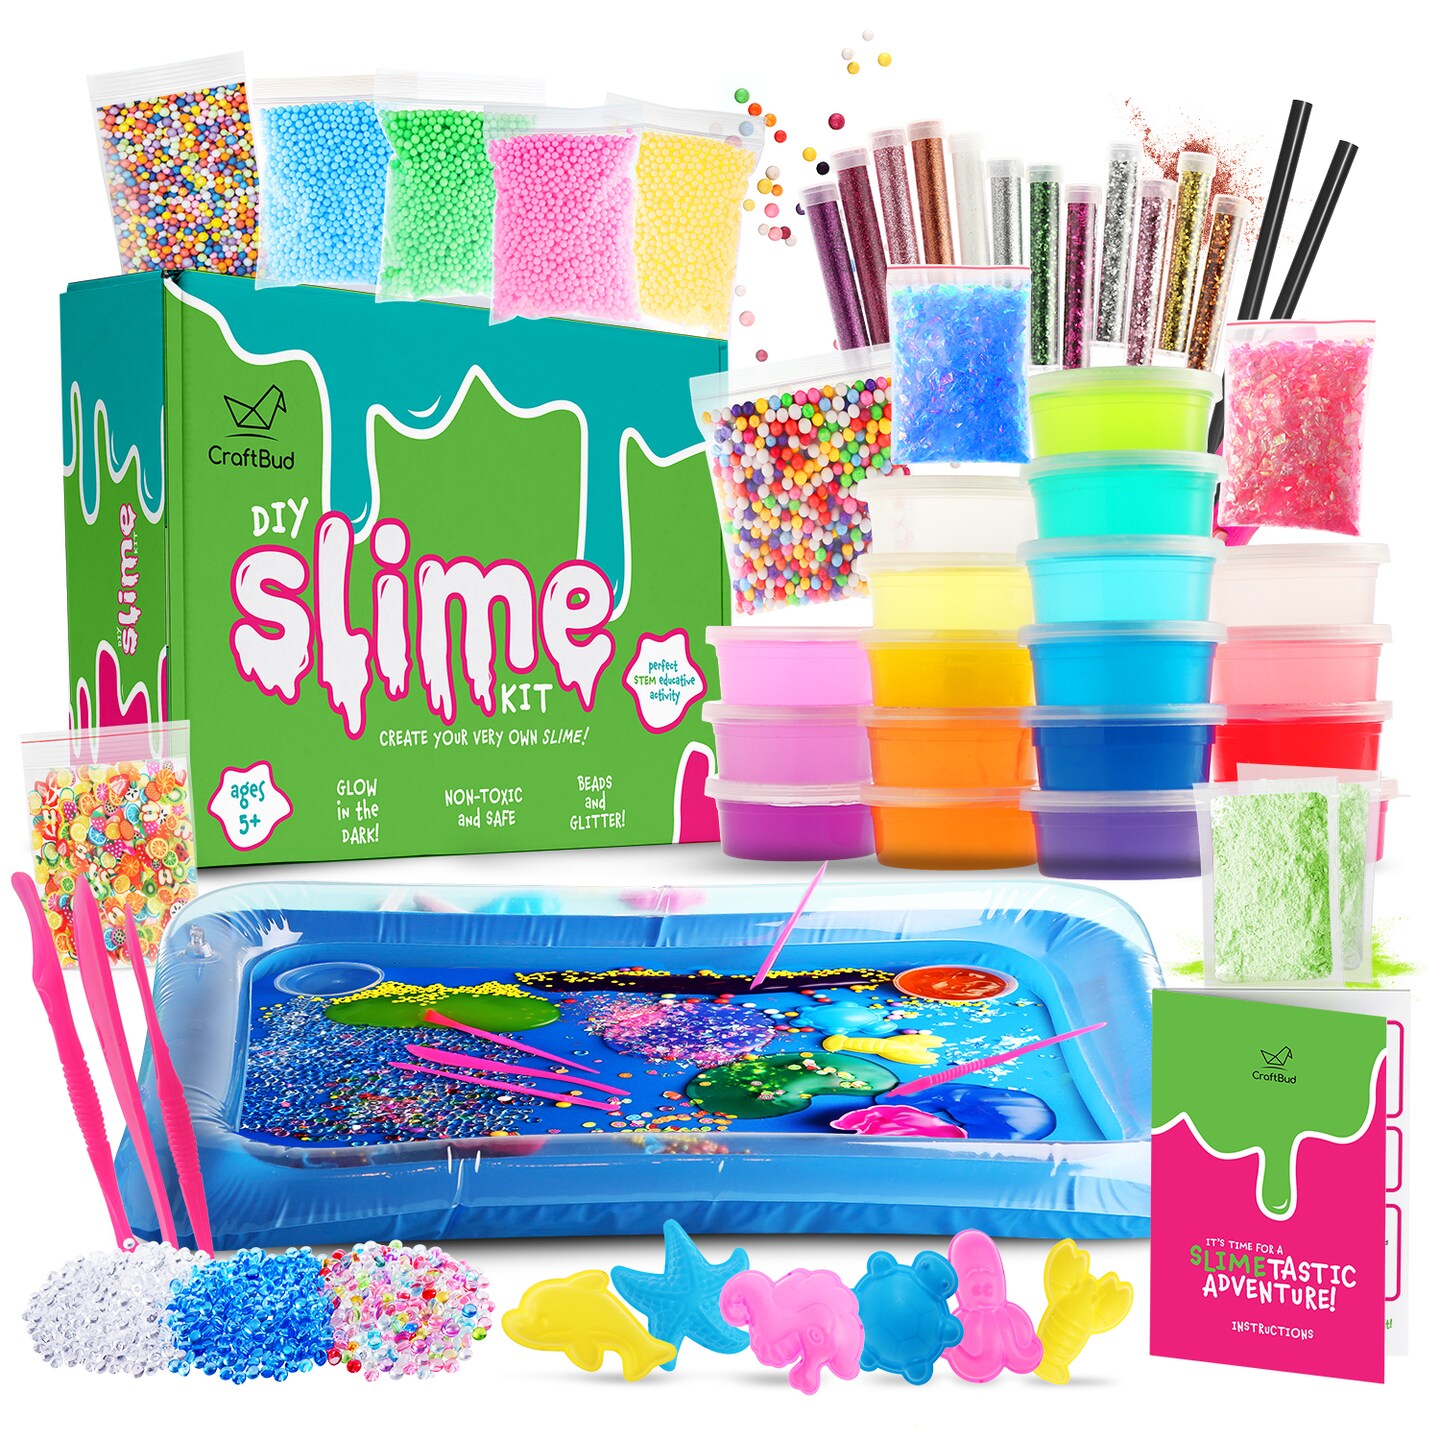 Up To 45% Off on CraftBud Slime Kit DIY Toy, K